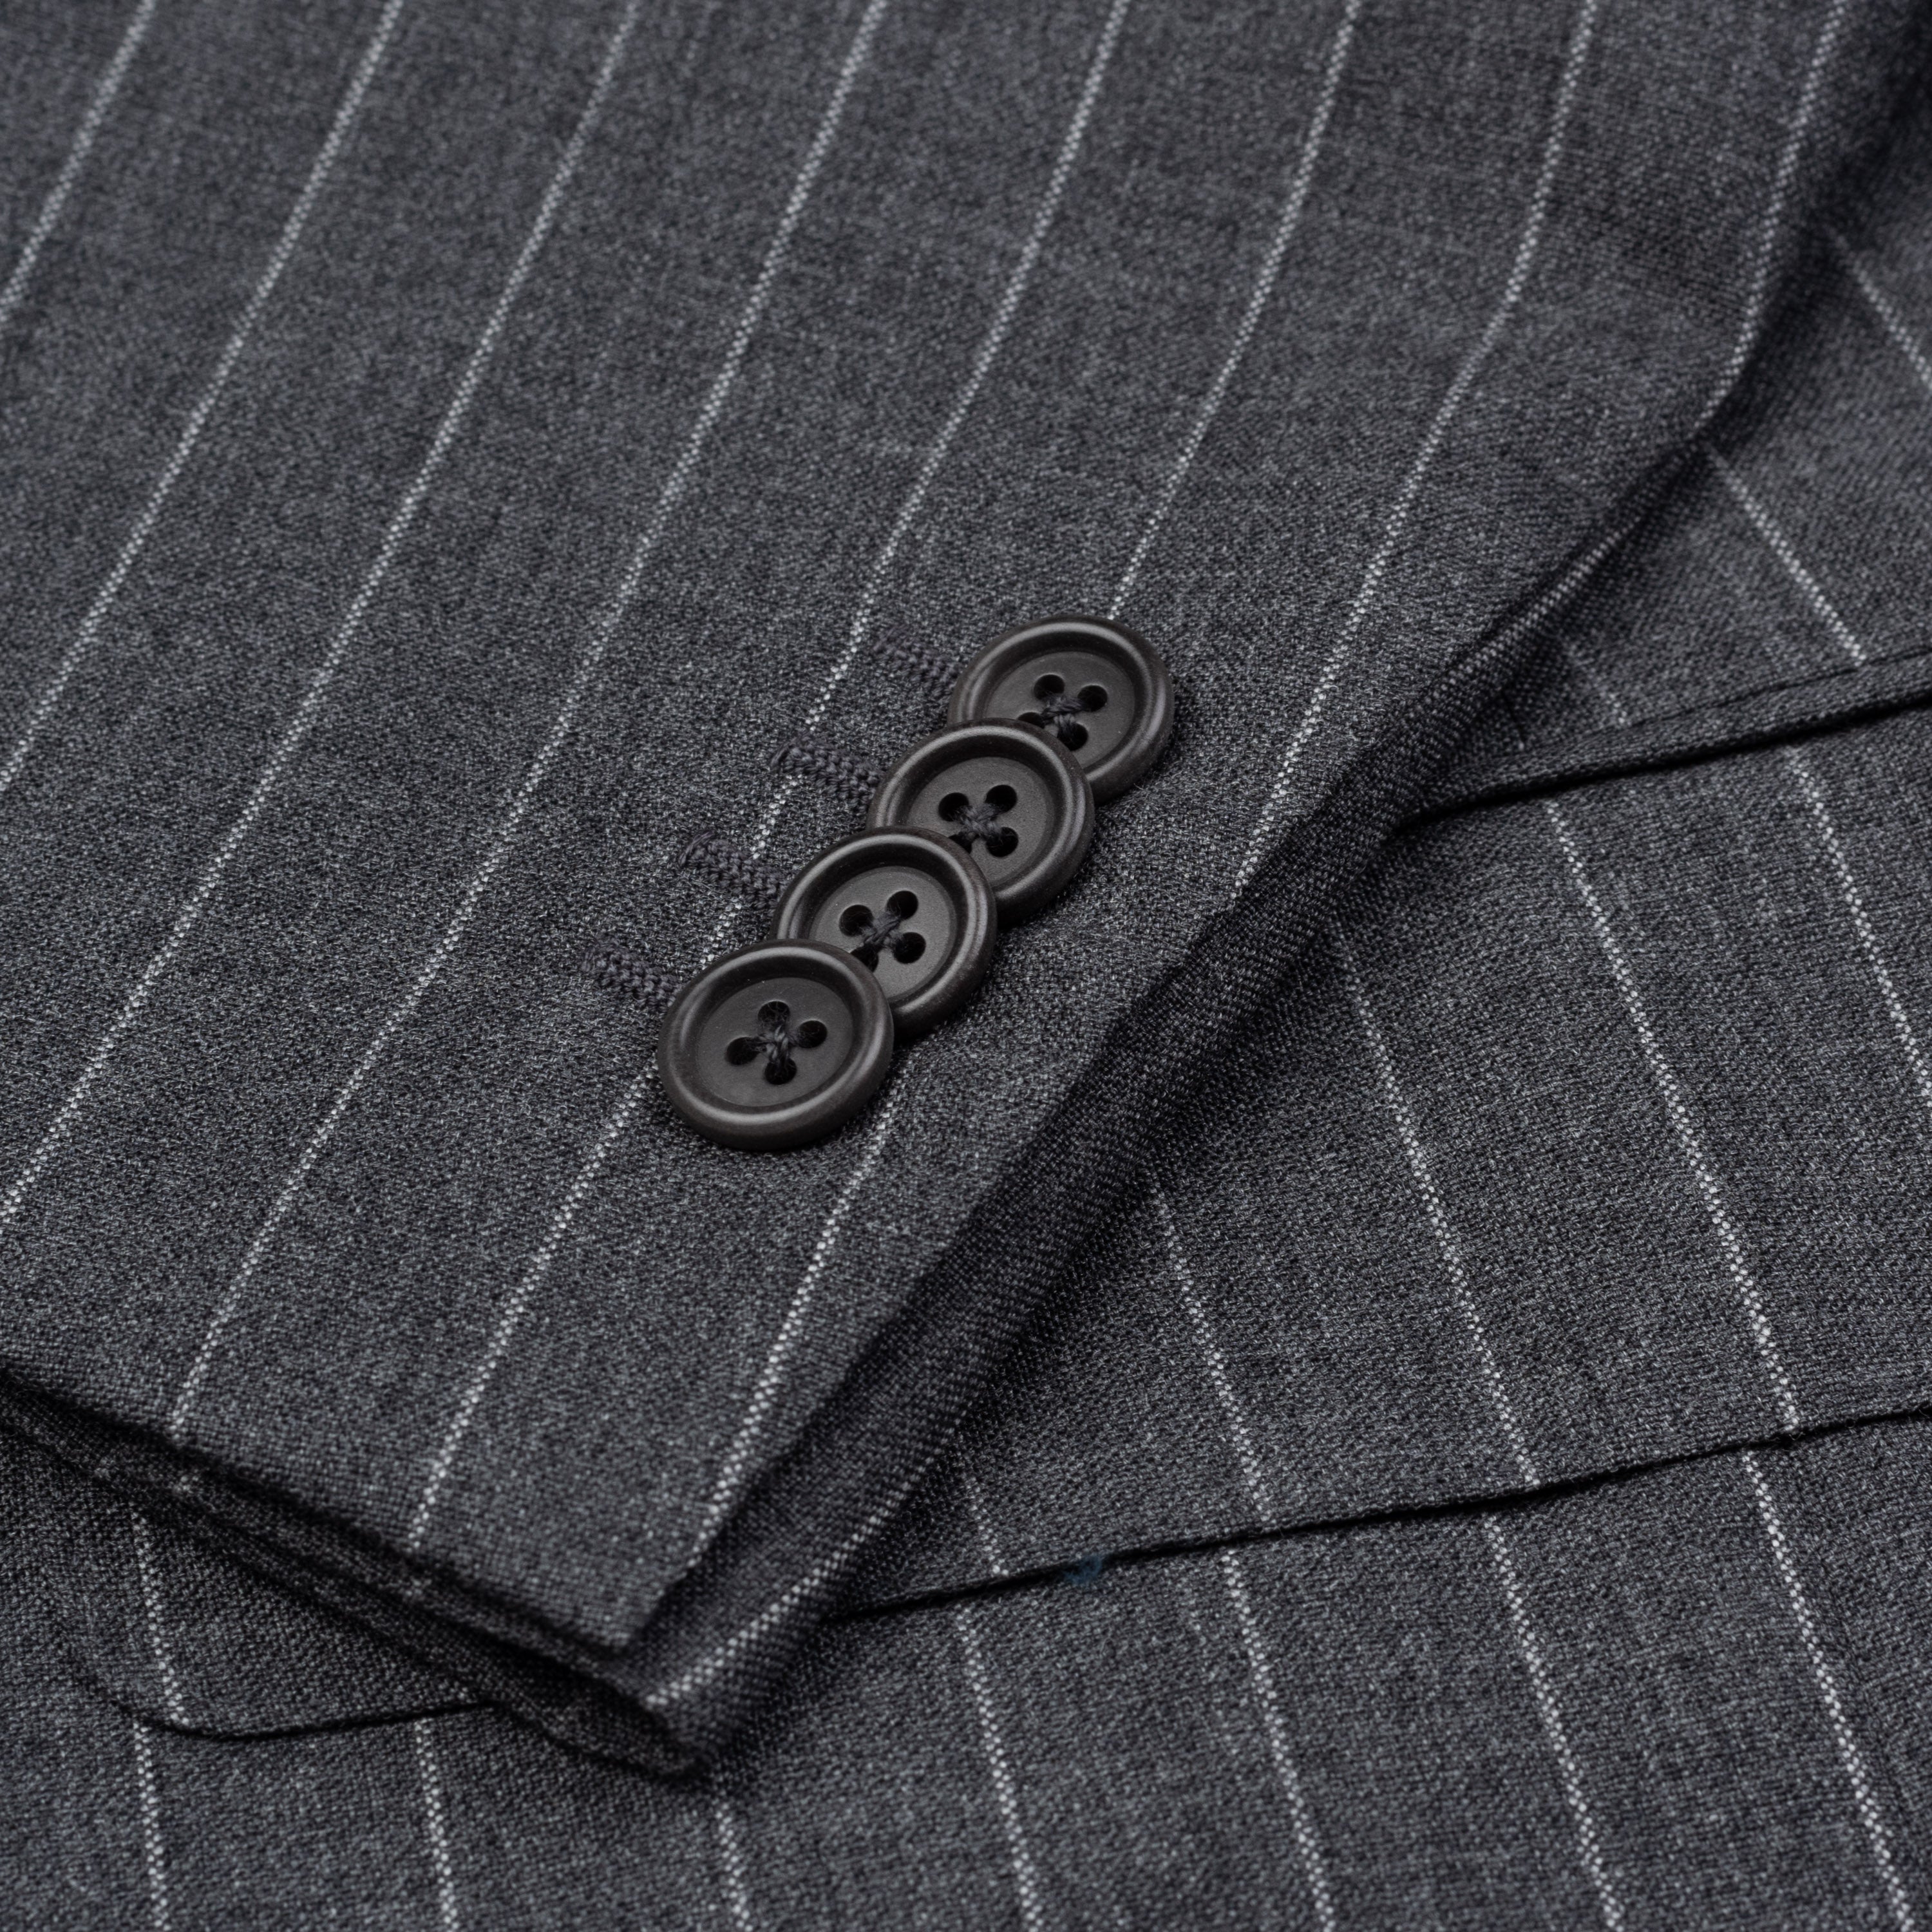 SARTORIA CASTANGIA Handmade Gray Striped Wool Business Suit NEW